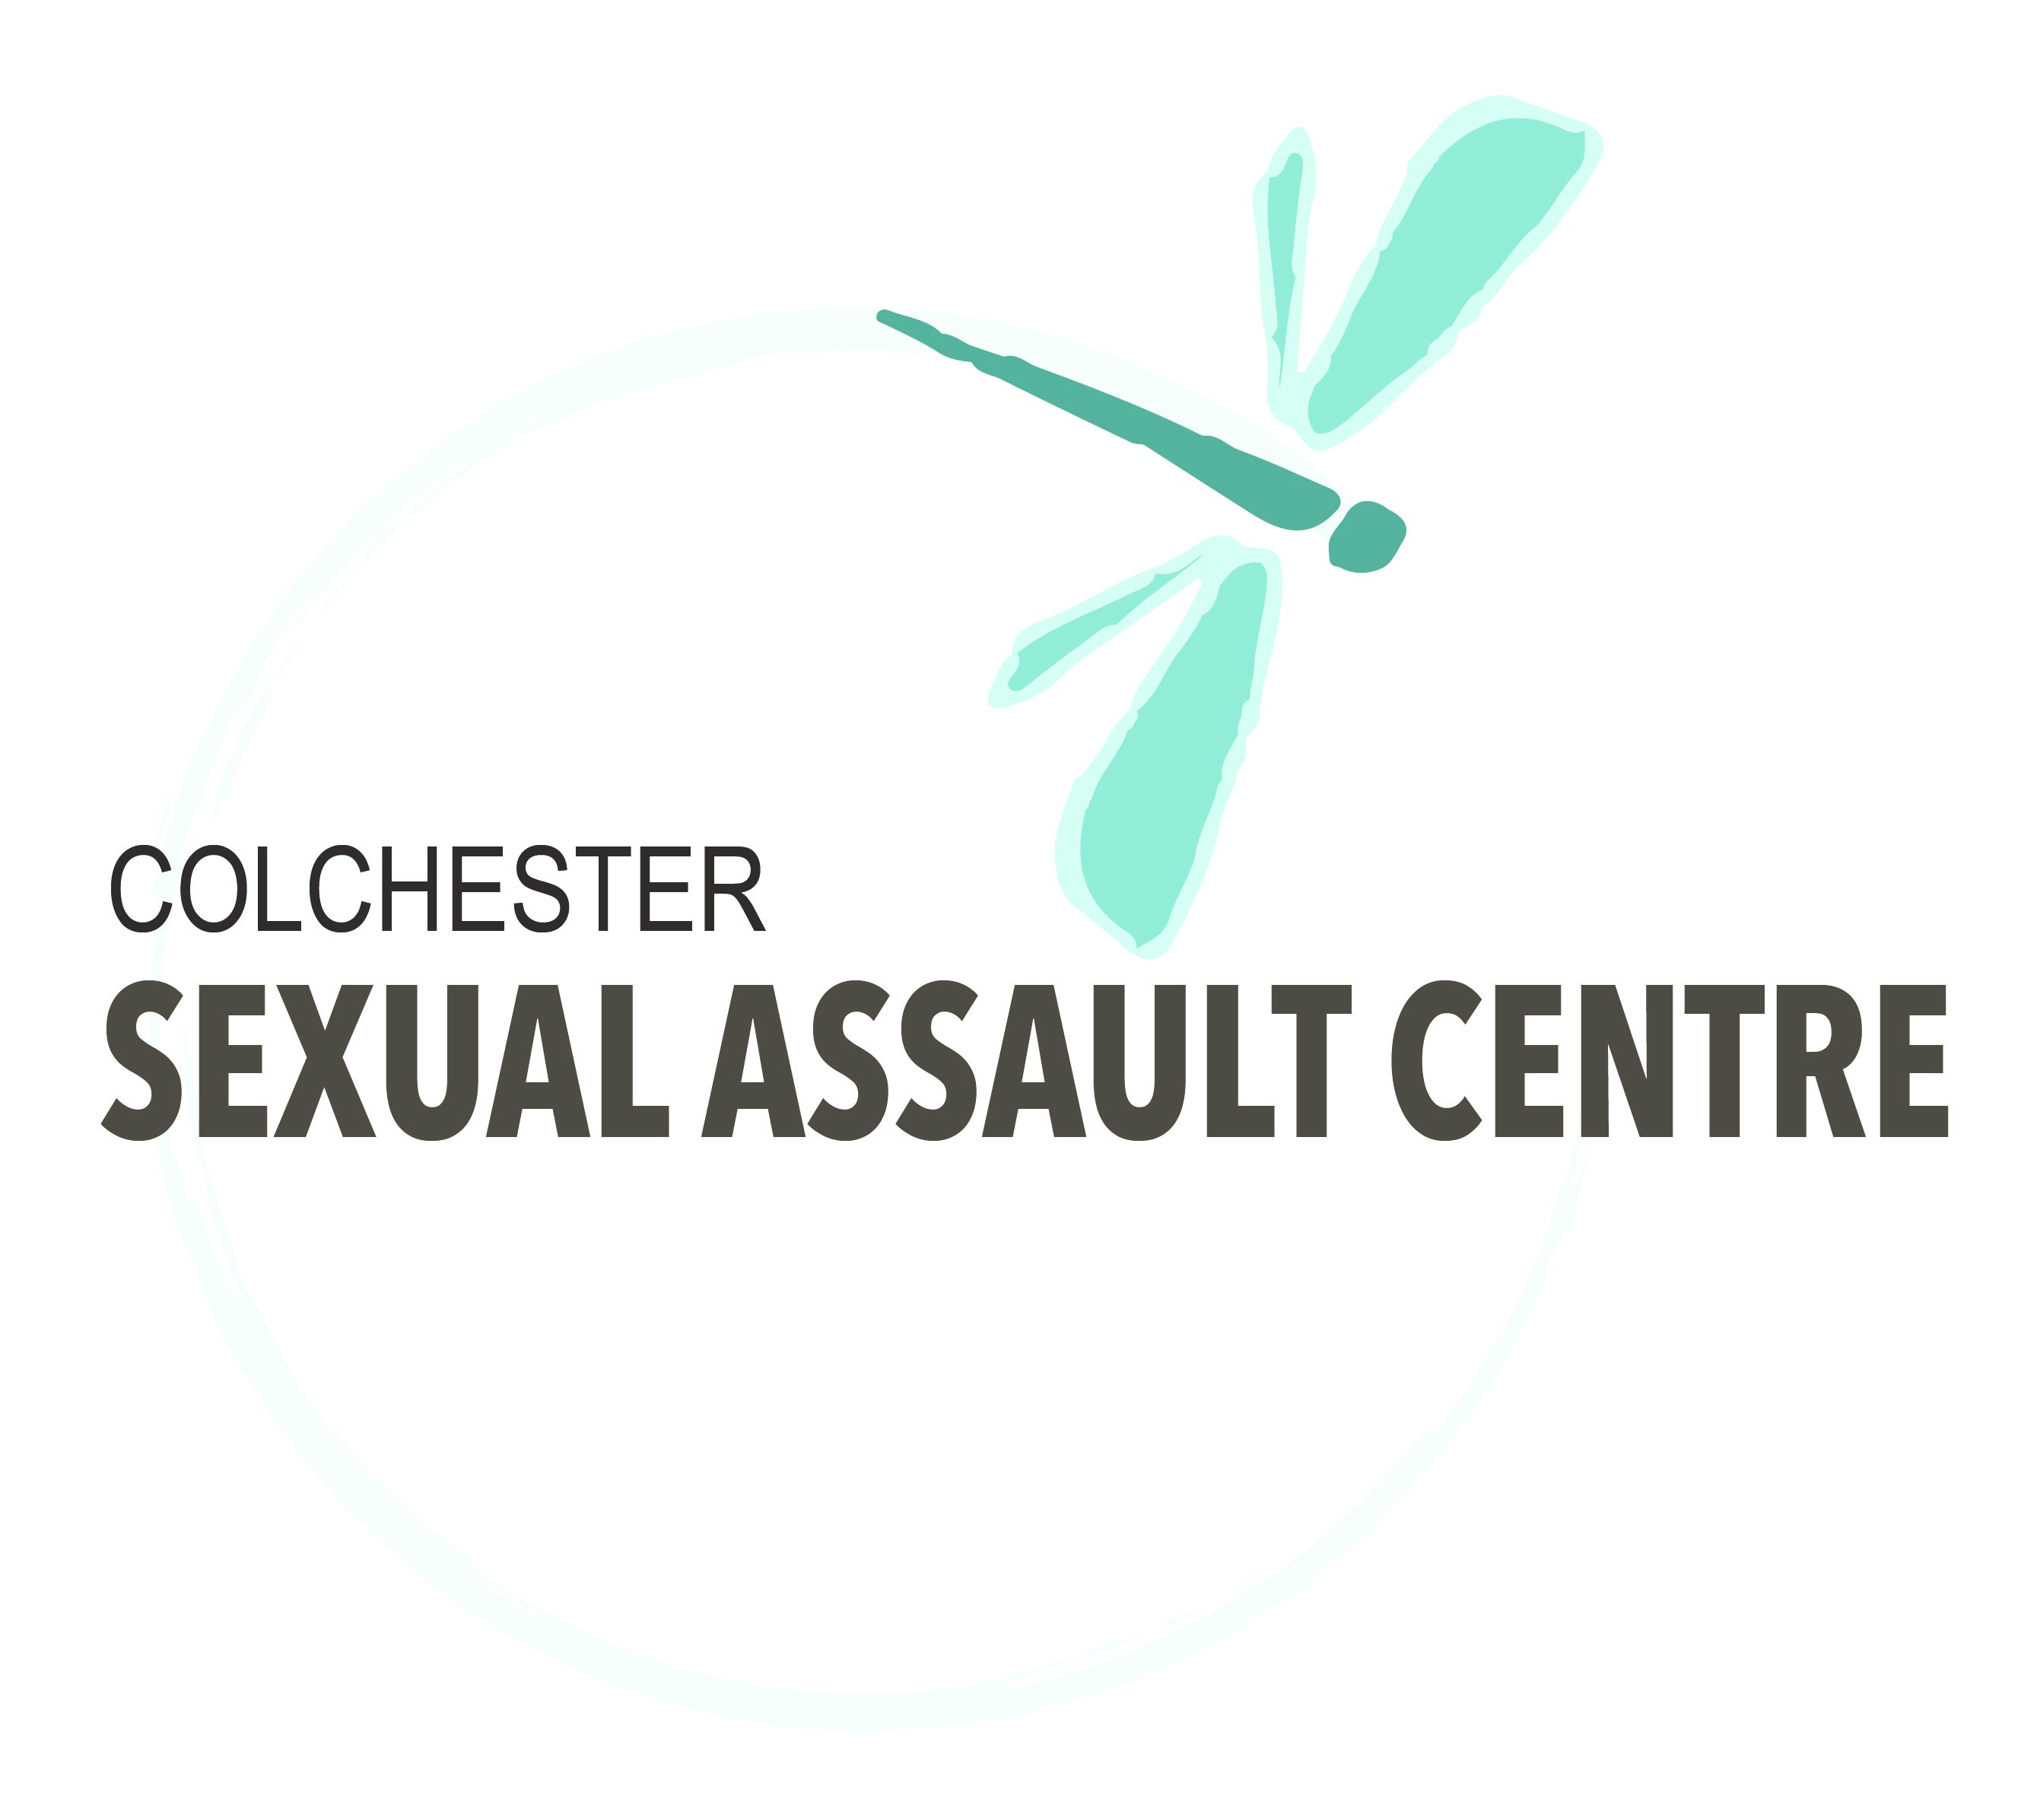 Colchester Sexual Assault Centre logo